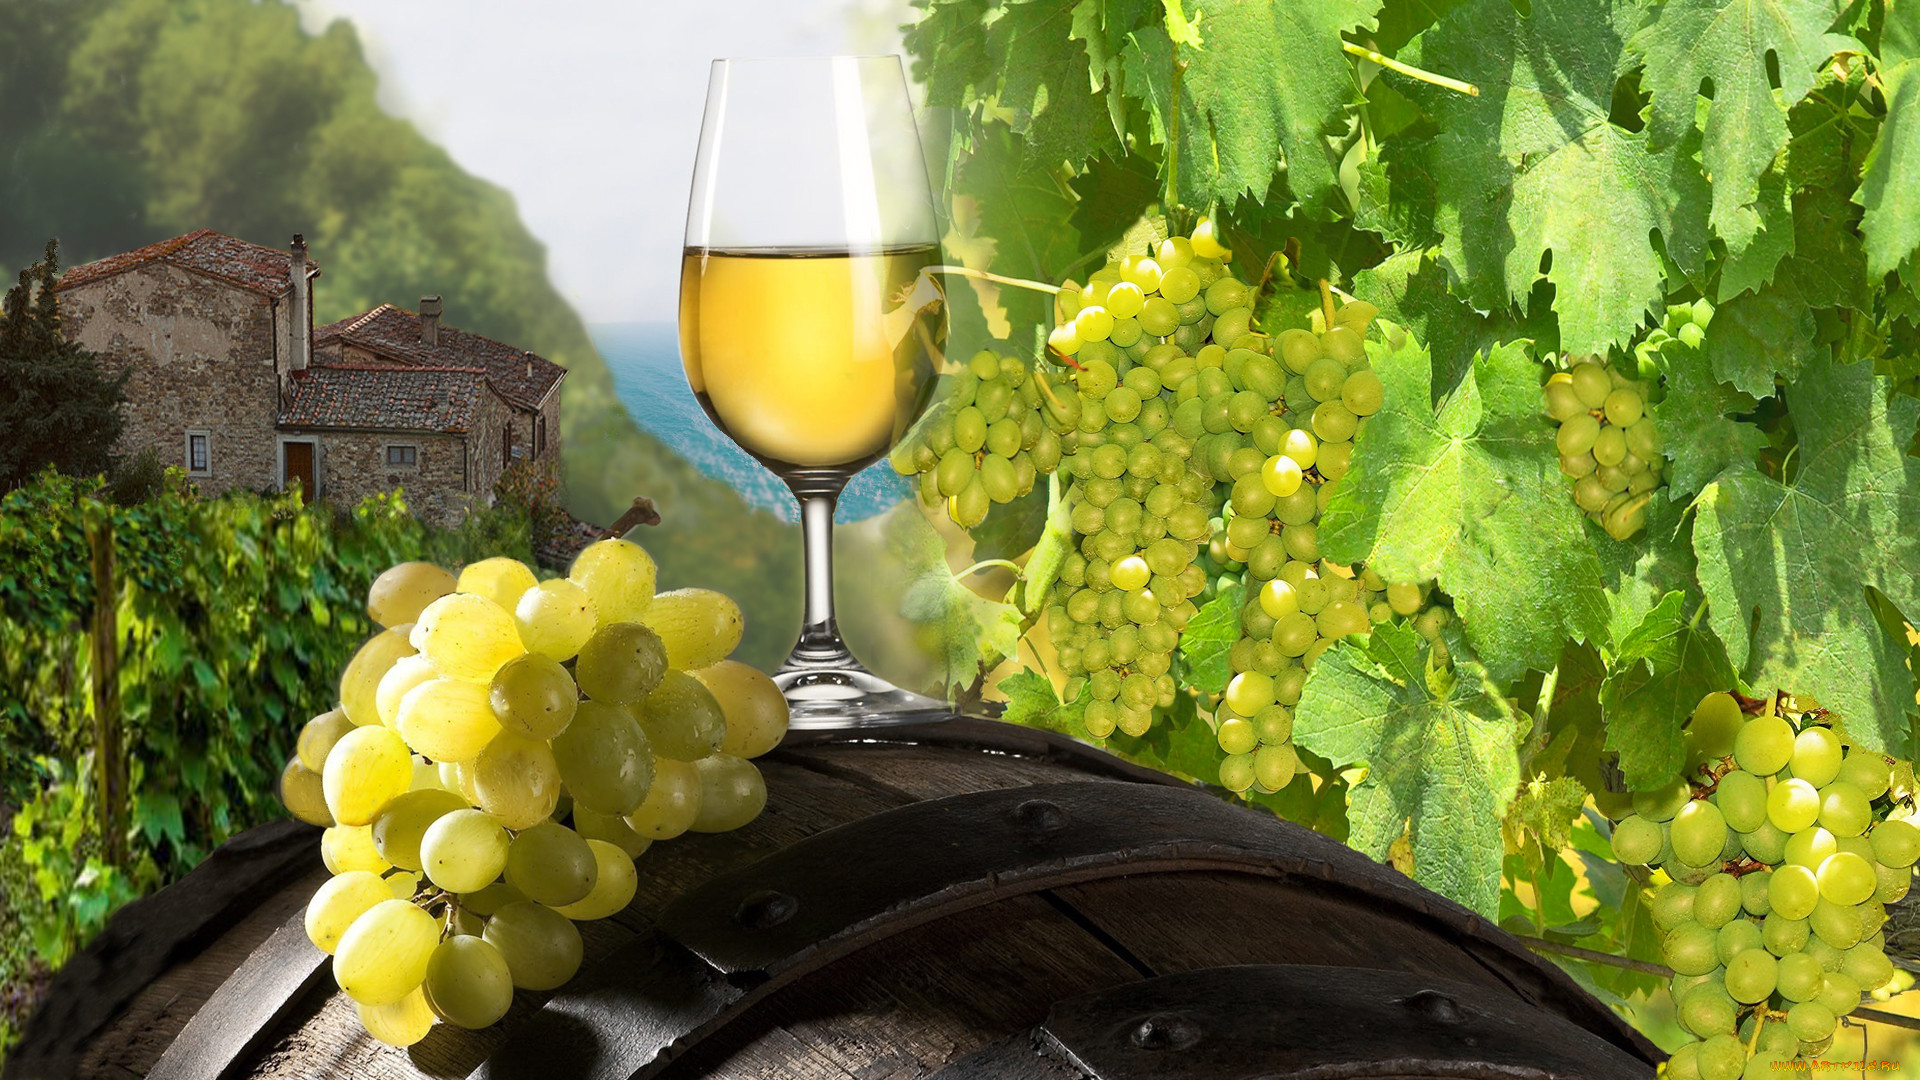 Виноград вино 7 букв. Коломбар виноград. Ркацители гроздь винограда. Виноградная лоза вино. Виноградники вино.